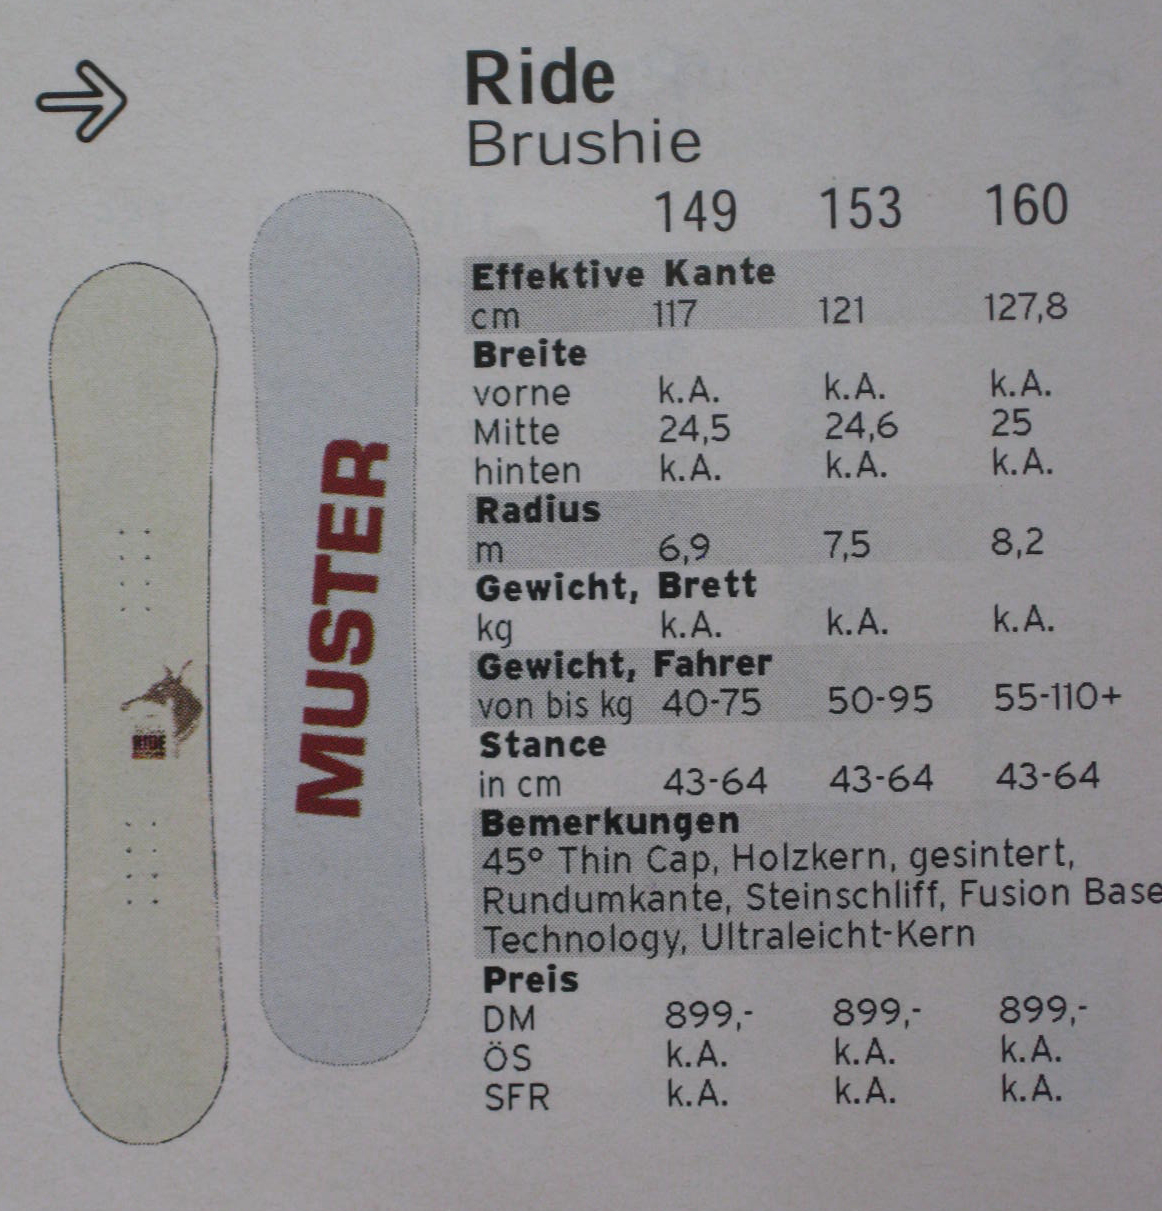 FOR TRADE (or Sale) RIDE - Jeff Brushie ('99/'00) - Snowboardmuseum.de